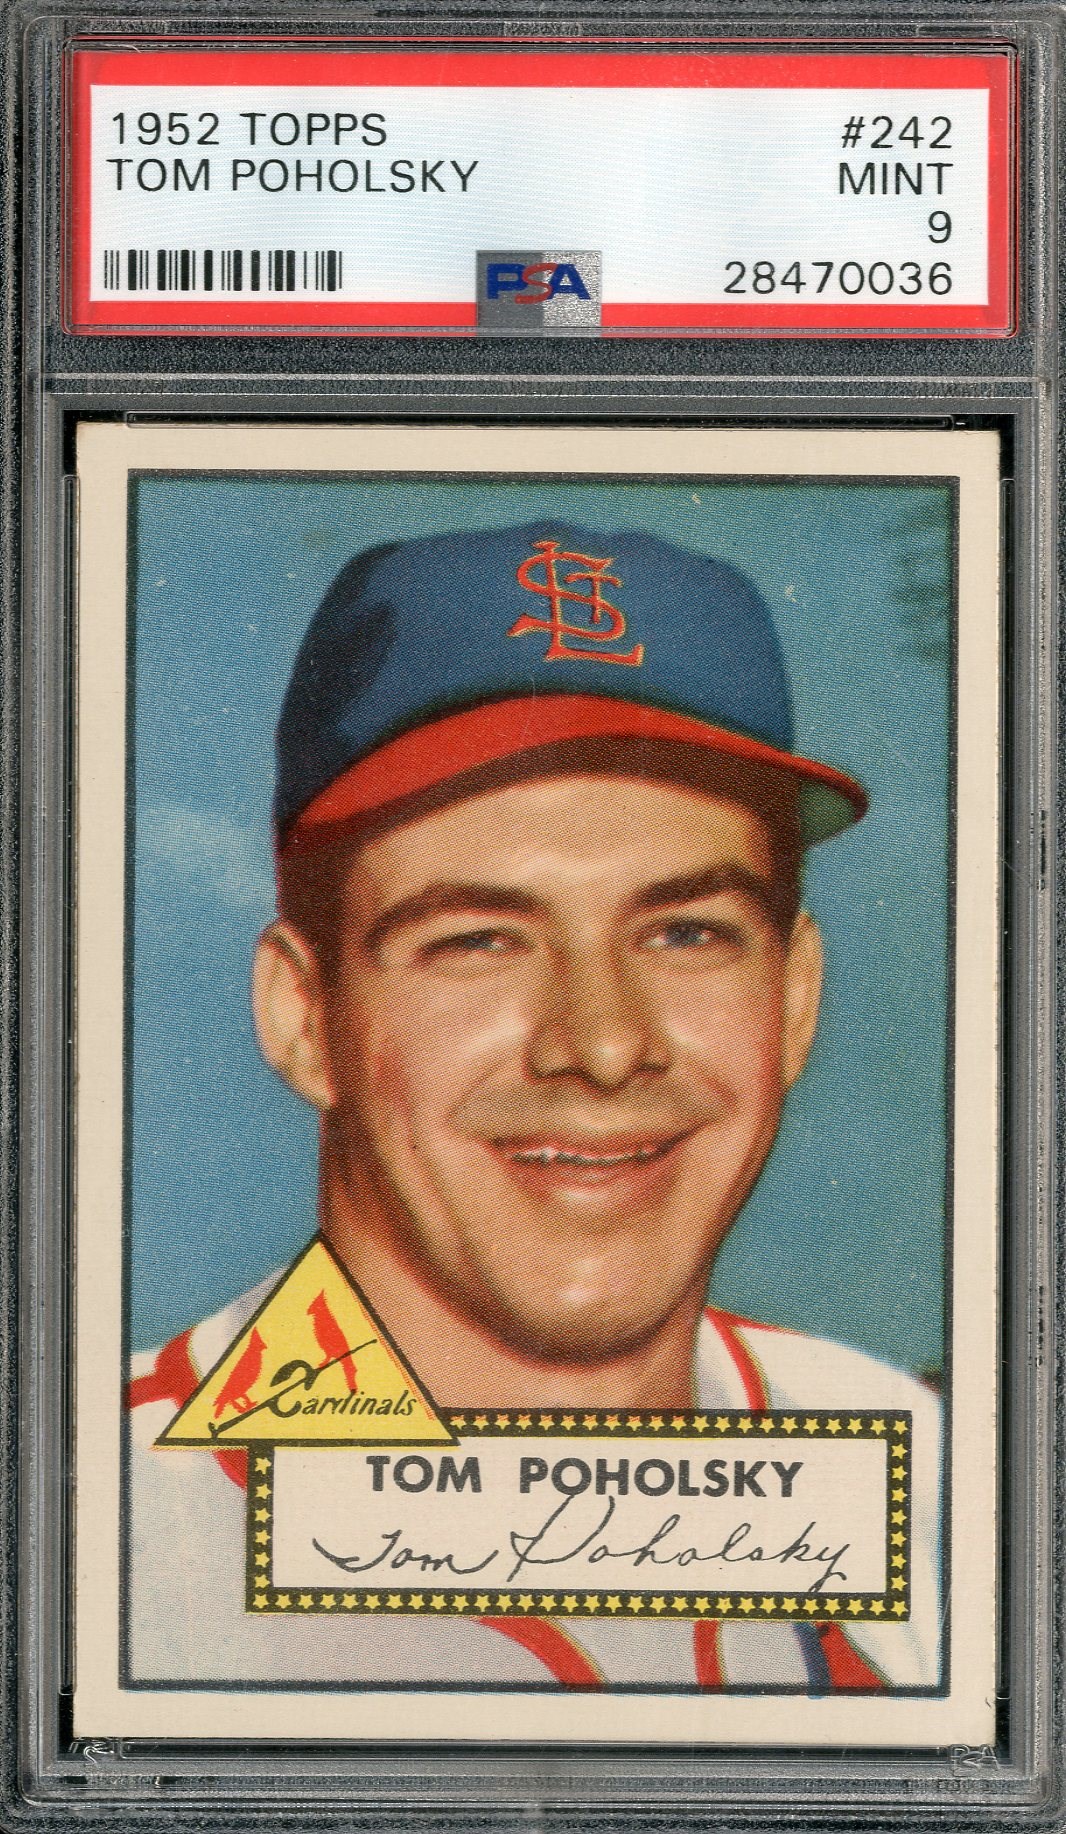 Baseball and Trading Cards - 1952 Topps #242 Tom Poholsky - PSA MINT 9